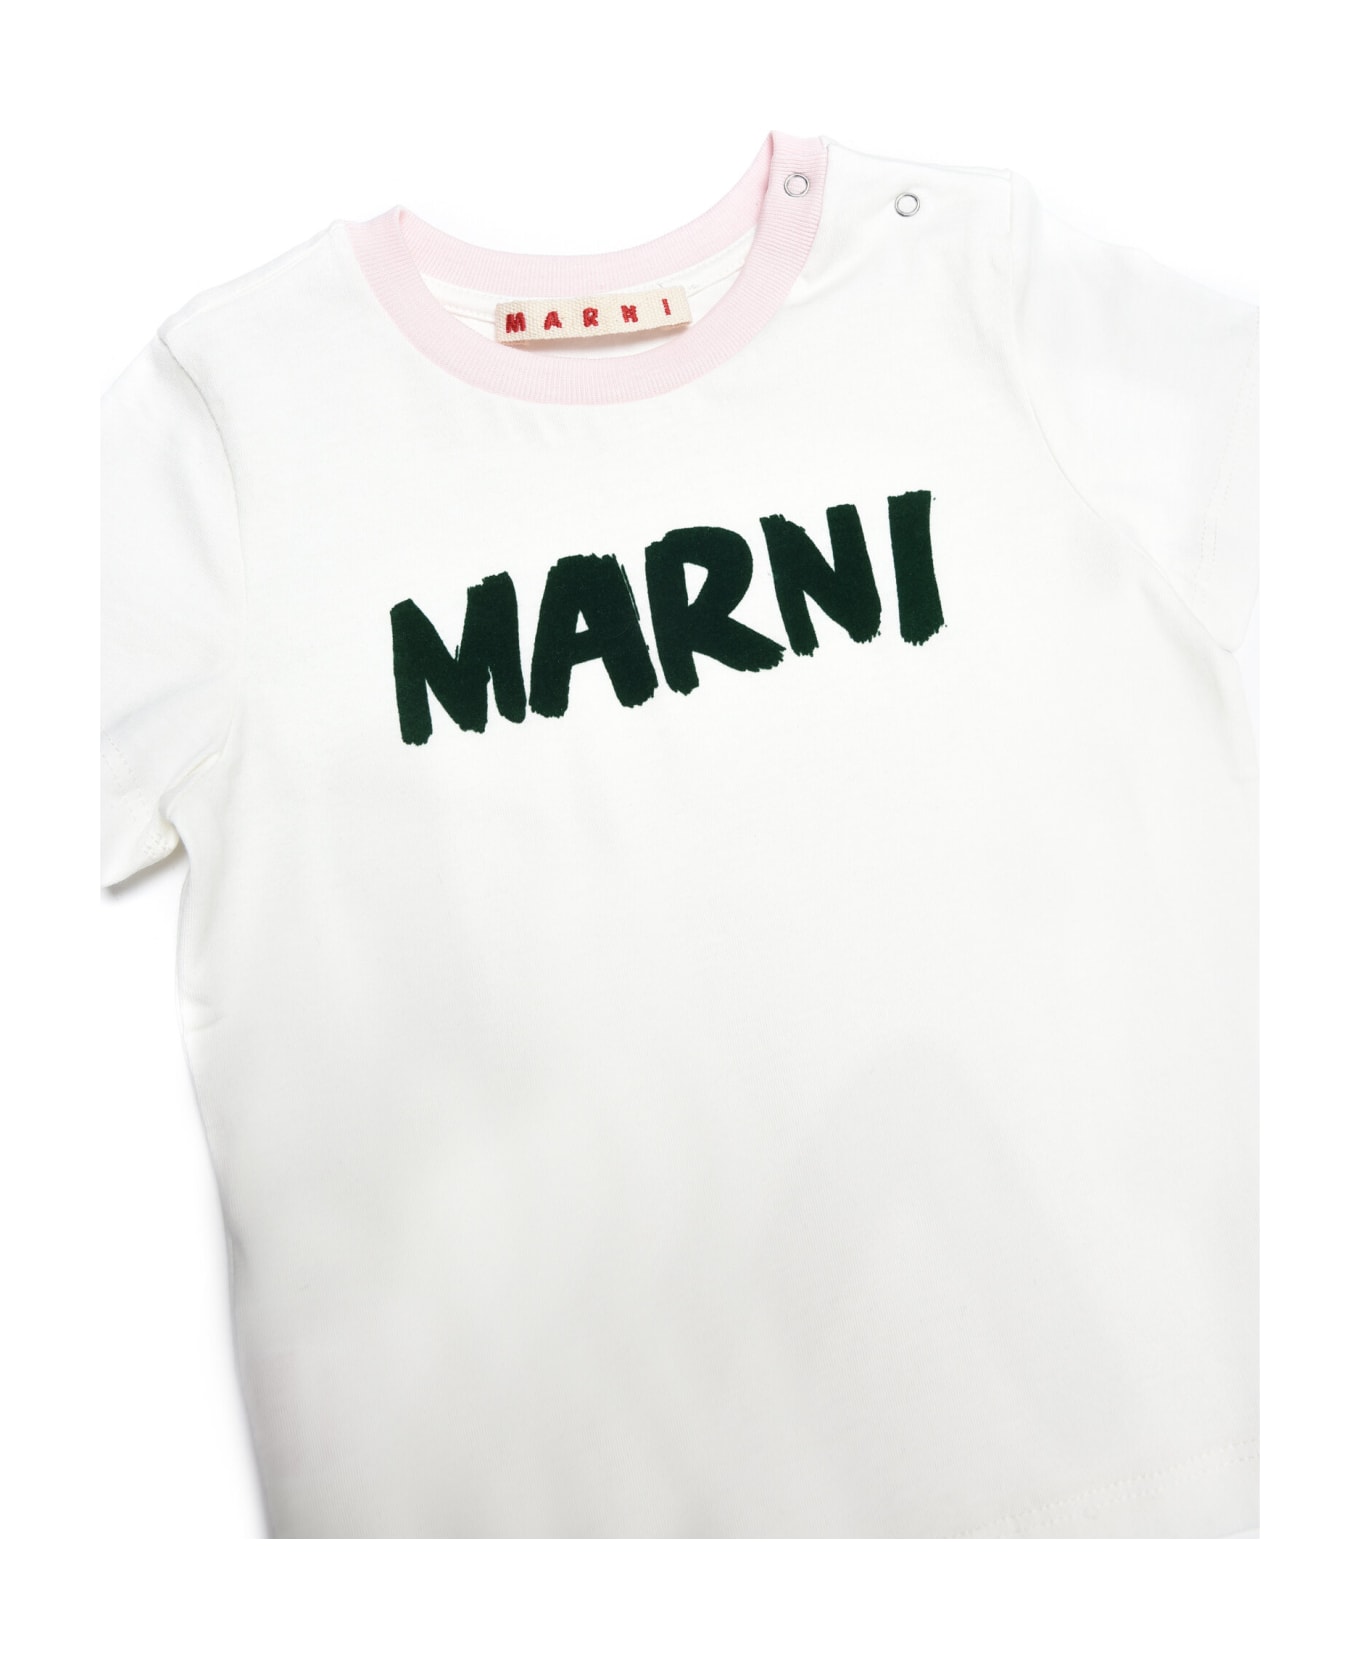 Marni Mt44b T-shirt Marni - Off white